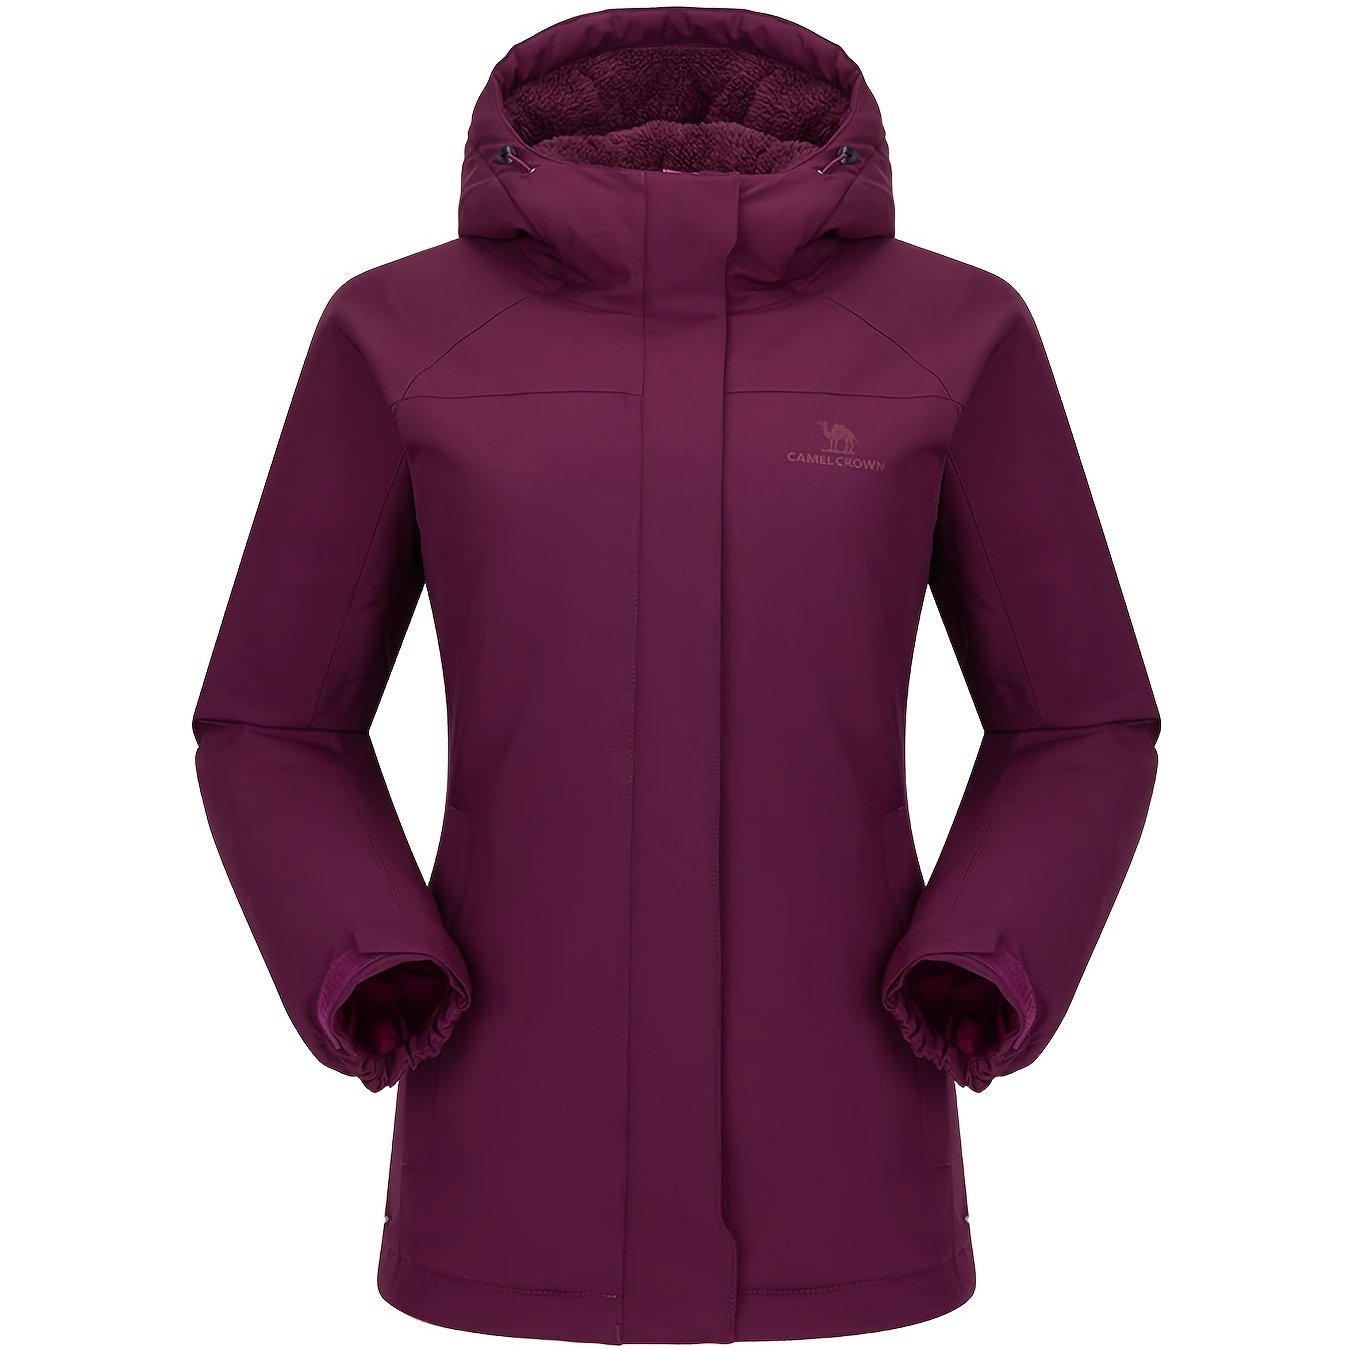  CAMEL CROWN Women's Warm Winter Ski Jackets Waterproof Snow Coat  with Hood Mountain Windproof Rain Jacket : Clothing, Shoes & Jewelry